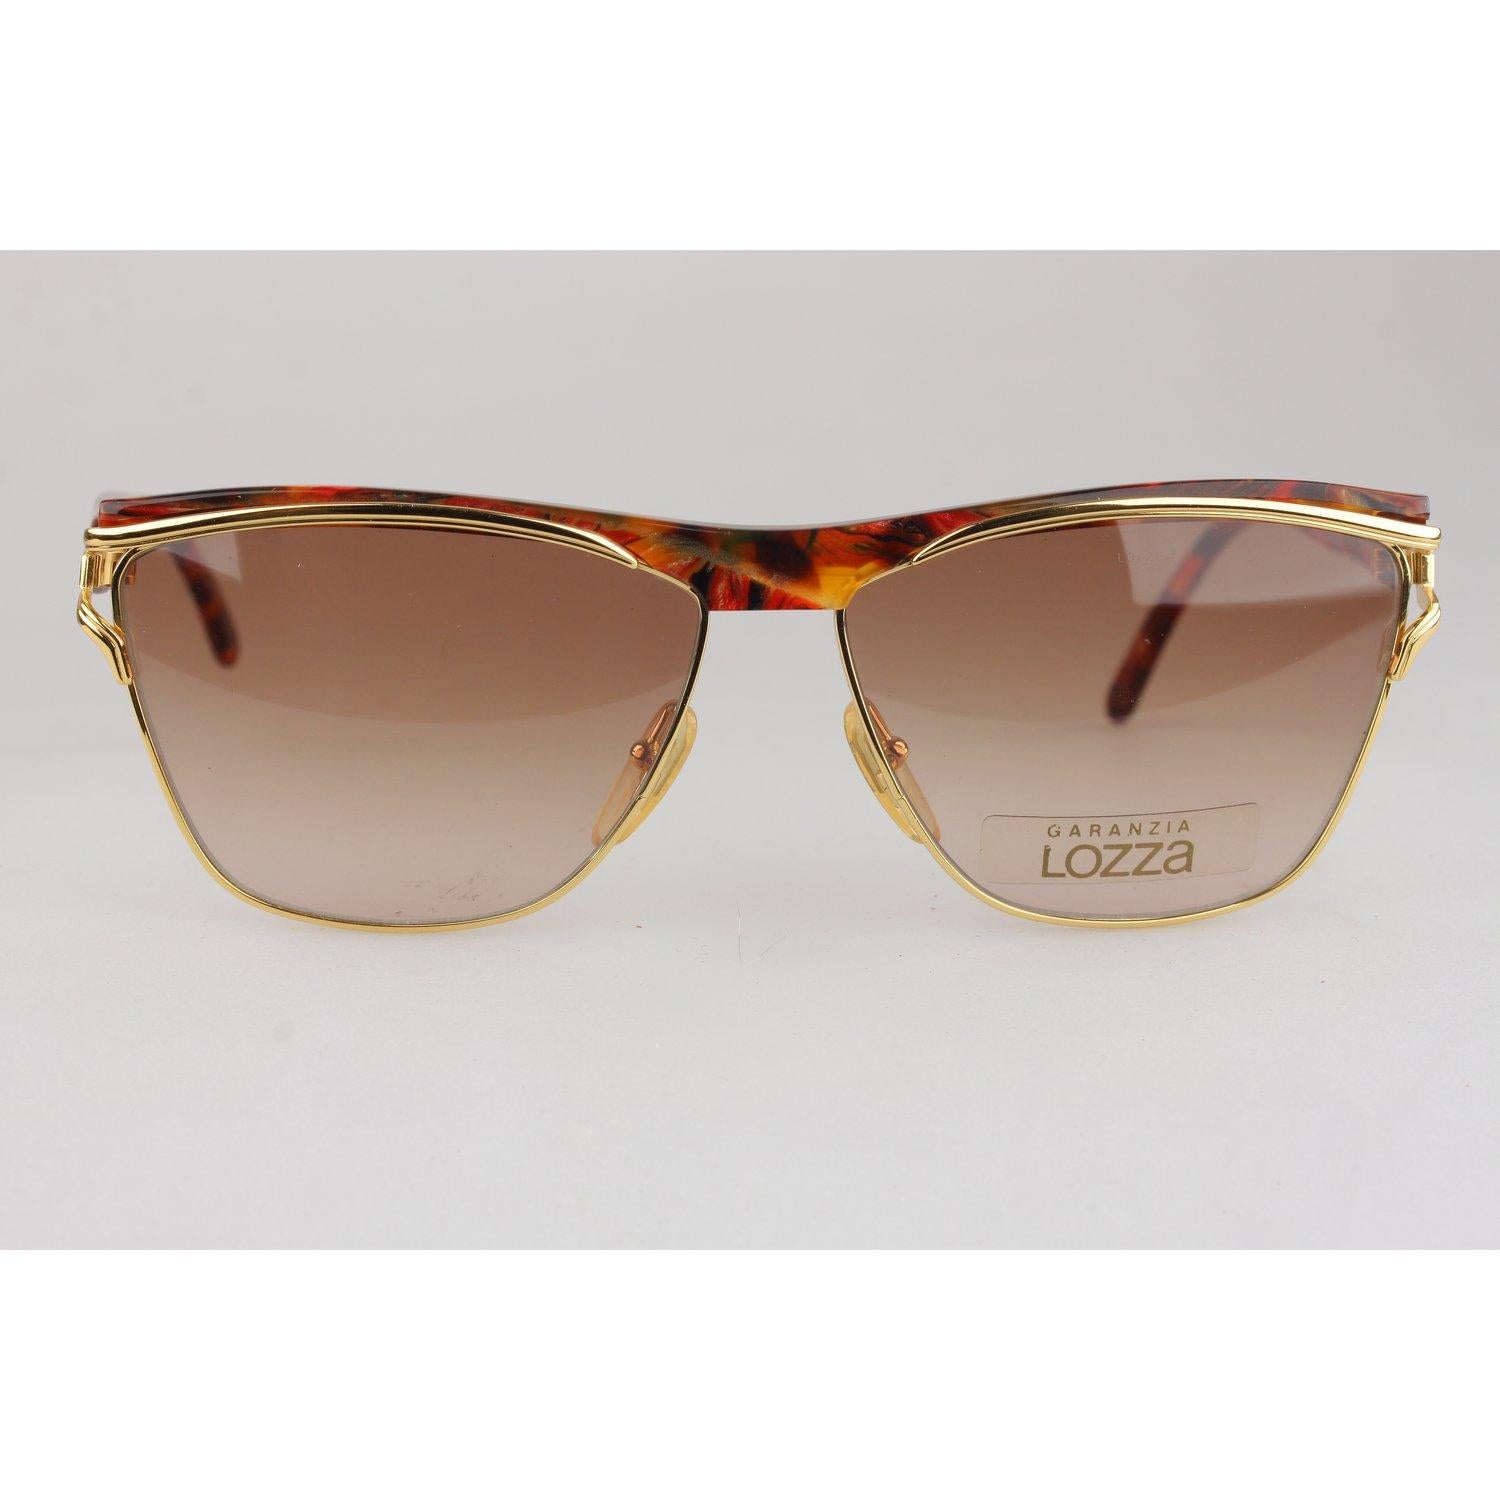 Lozza VIntage Unisex Brown and Gold Sunglasses Mod. Letizia 135mm Wide 7